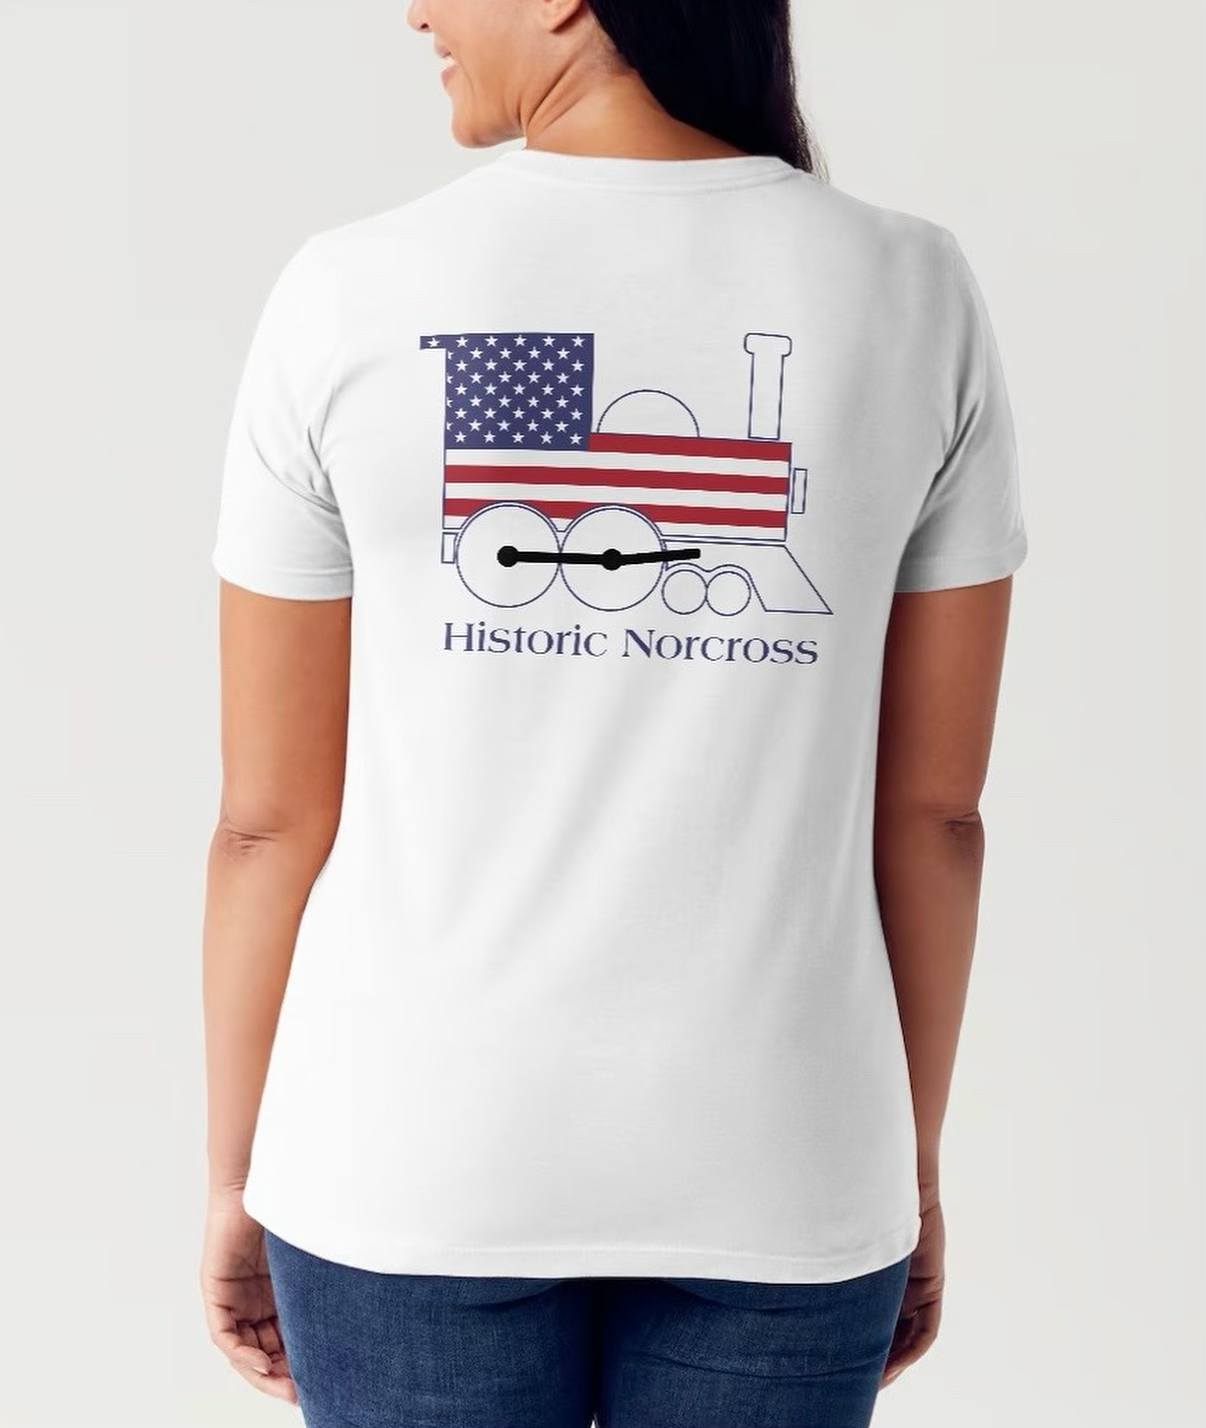 Historic Norcross Train T-shirt